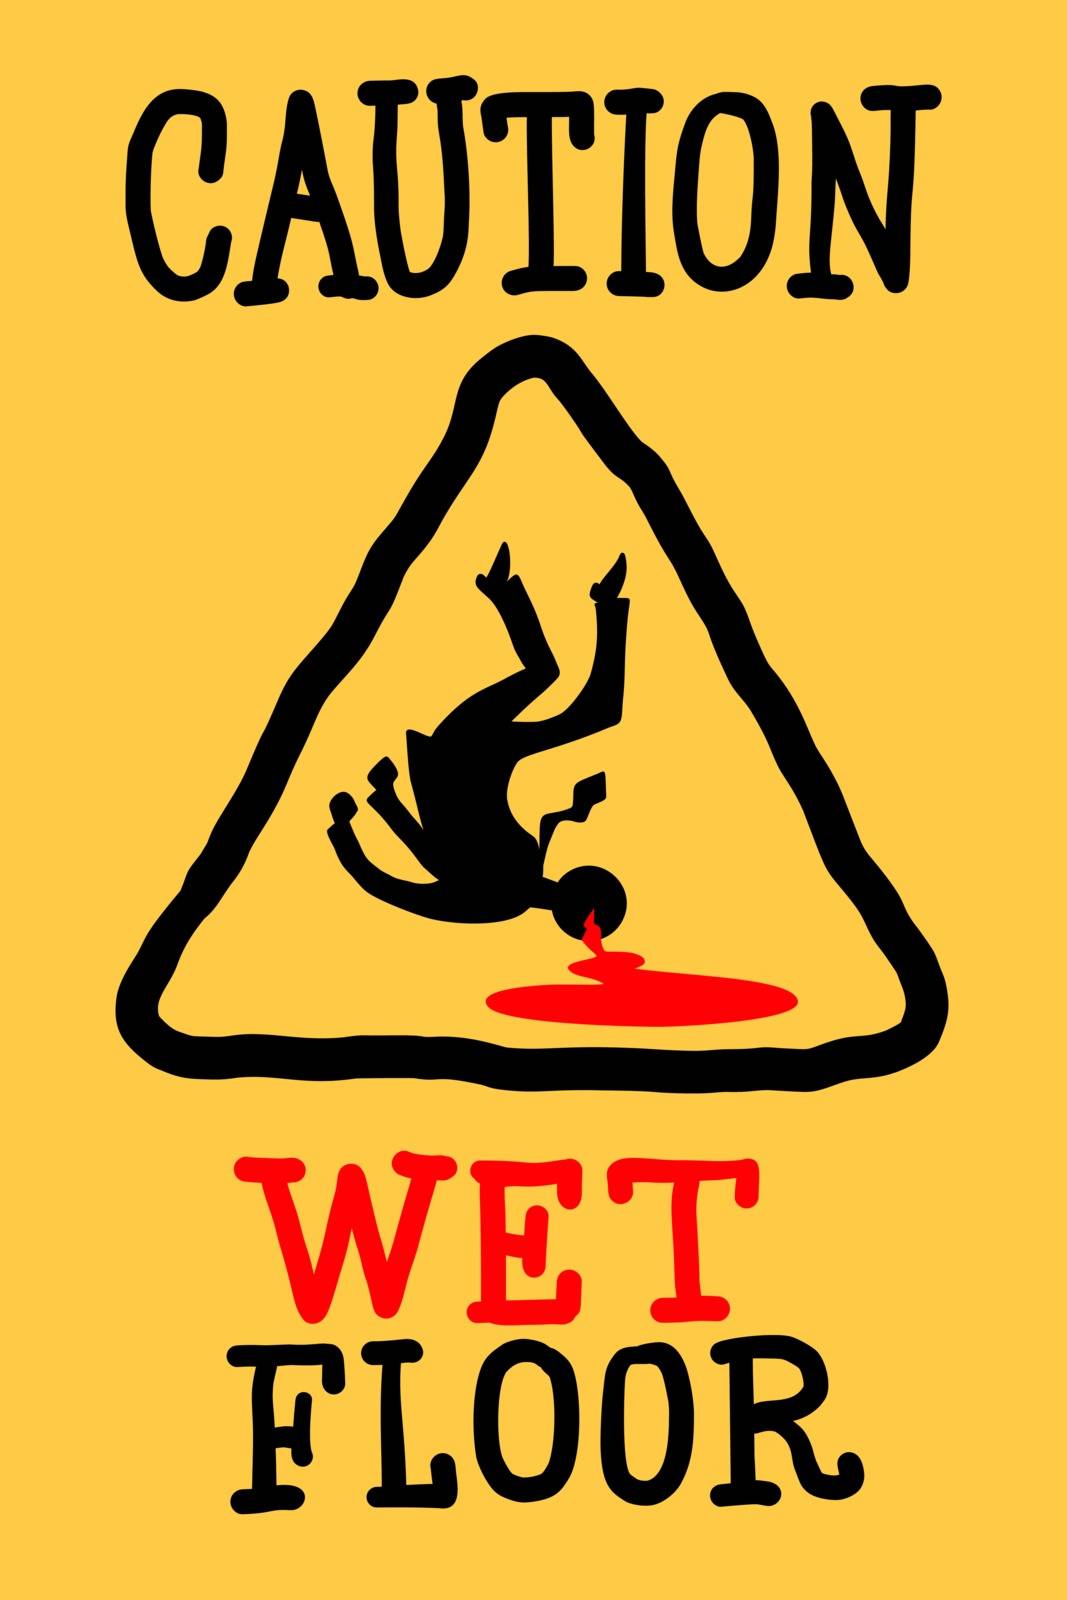 caution wet floor. Comic cartoon pop art retro drawing illustration